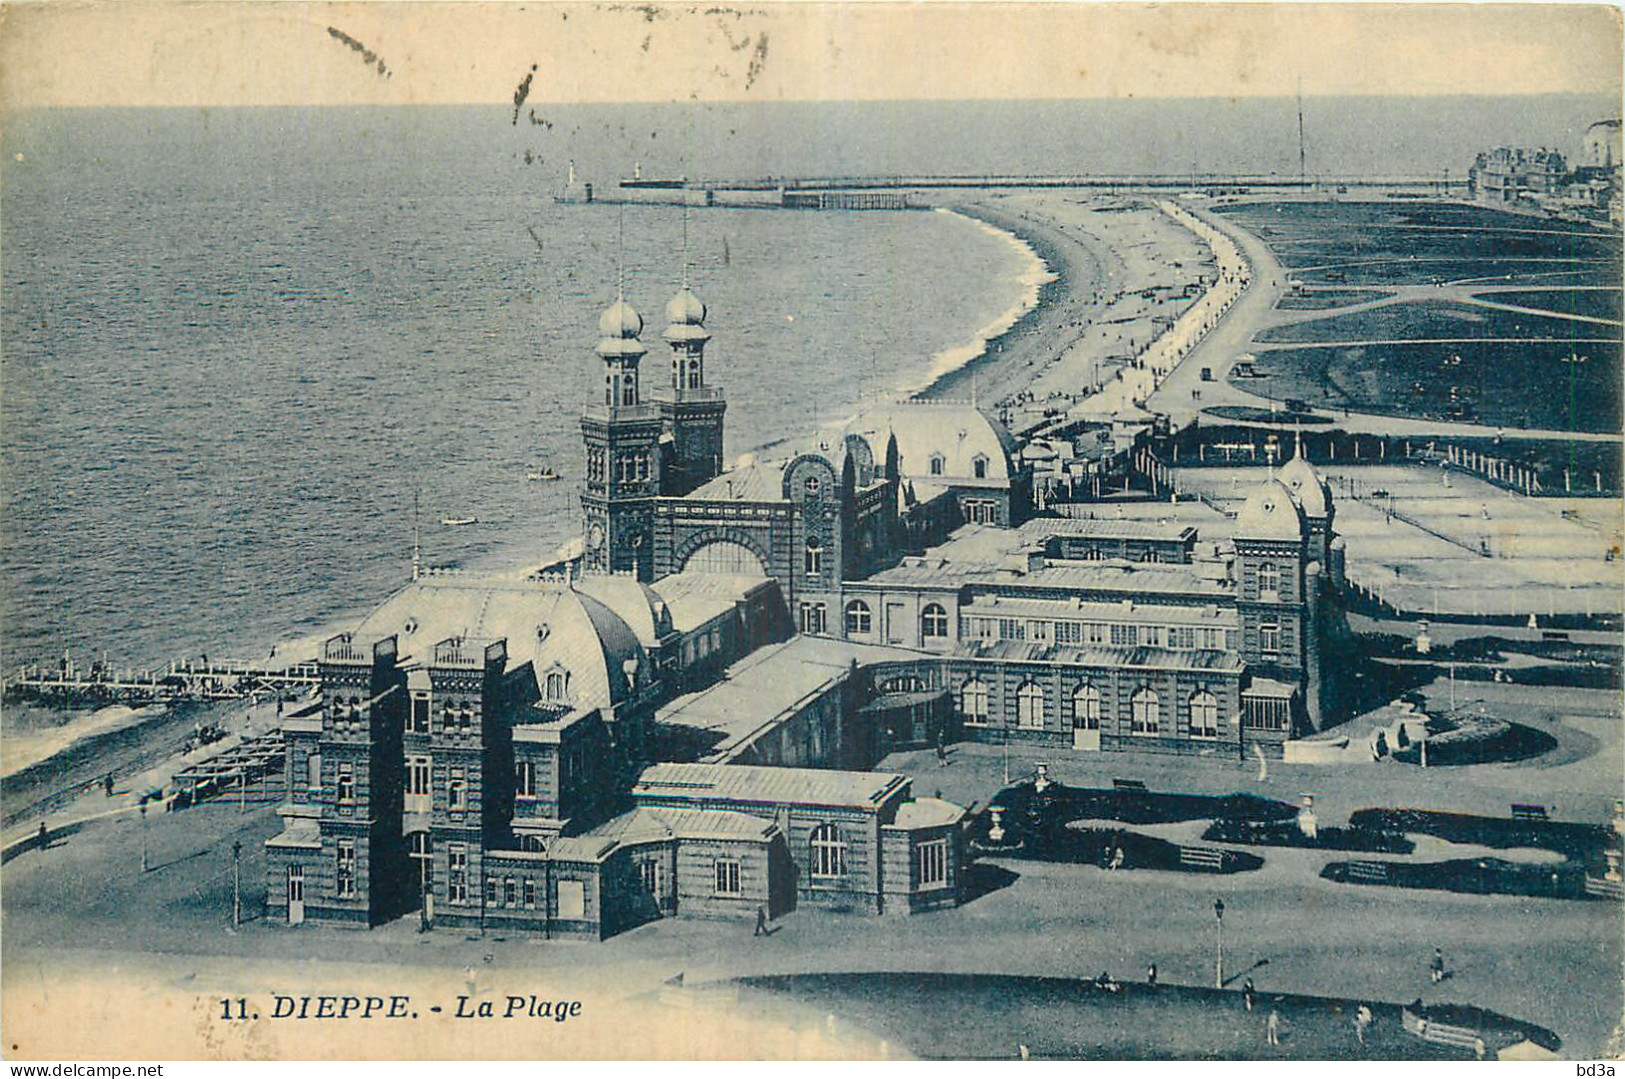  76  - DIEPPE - LA PLAGE - Dieppe